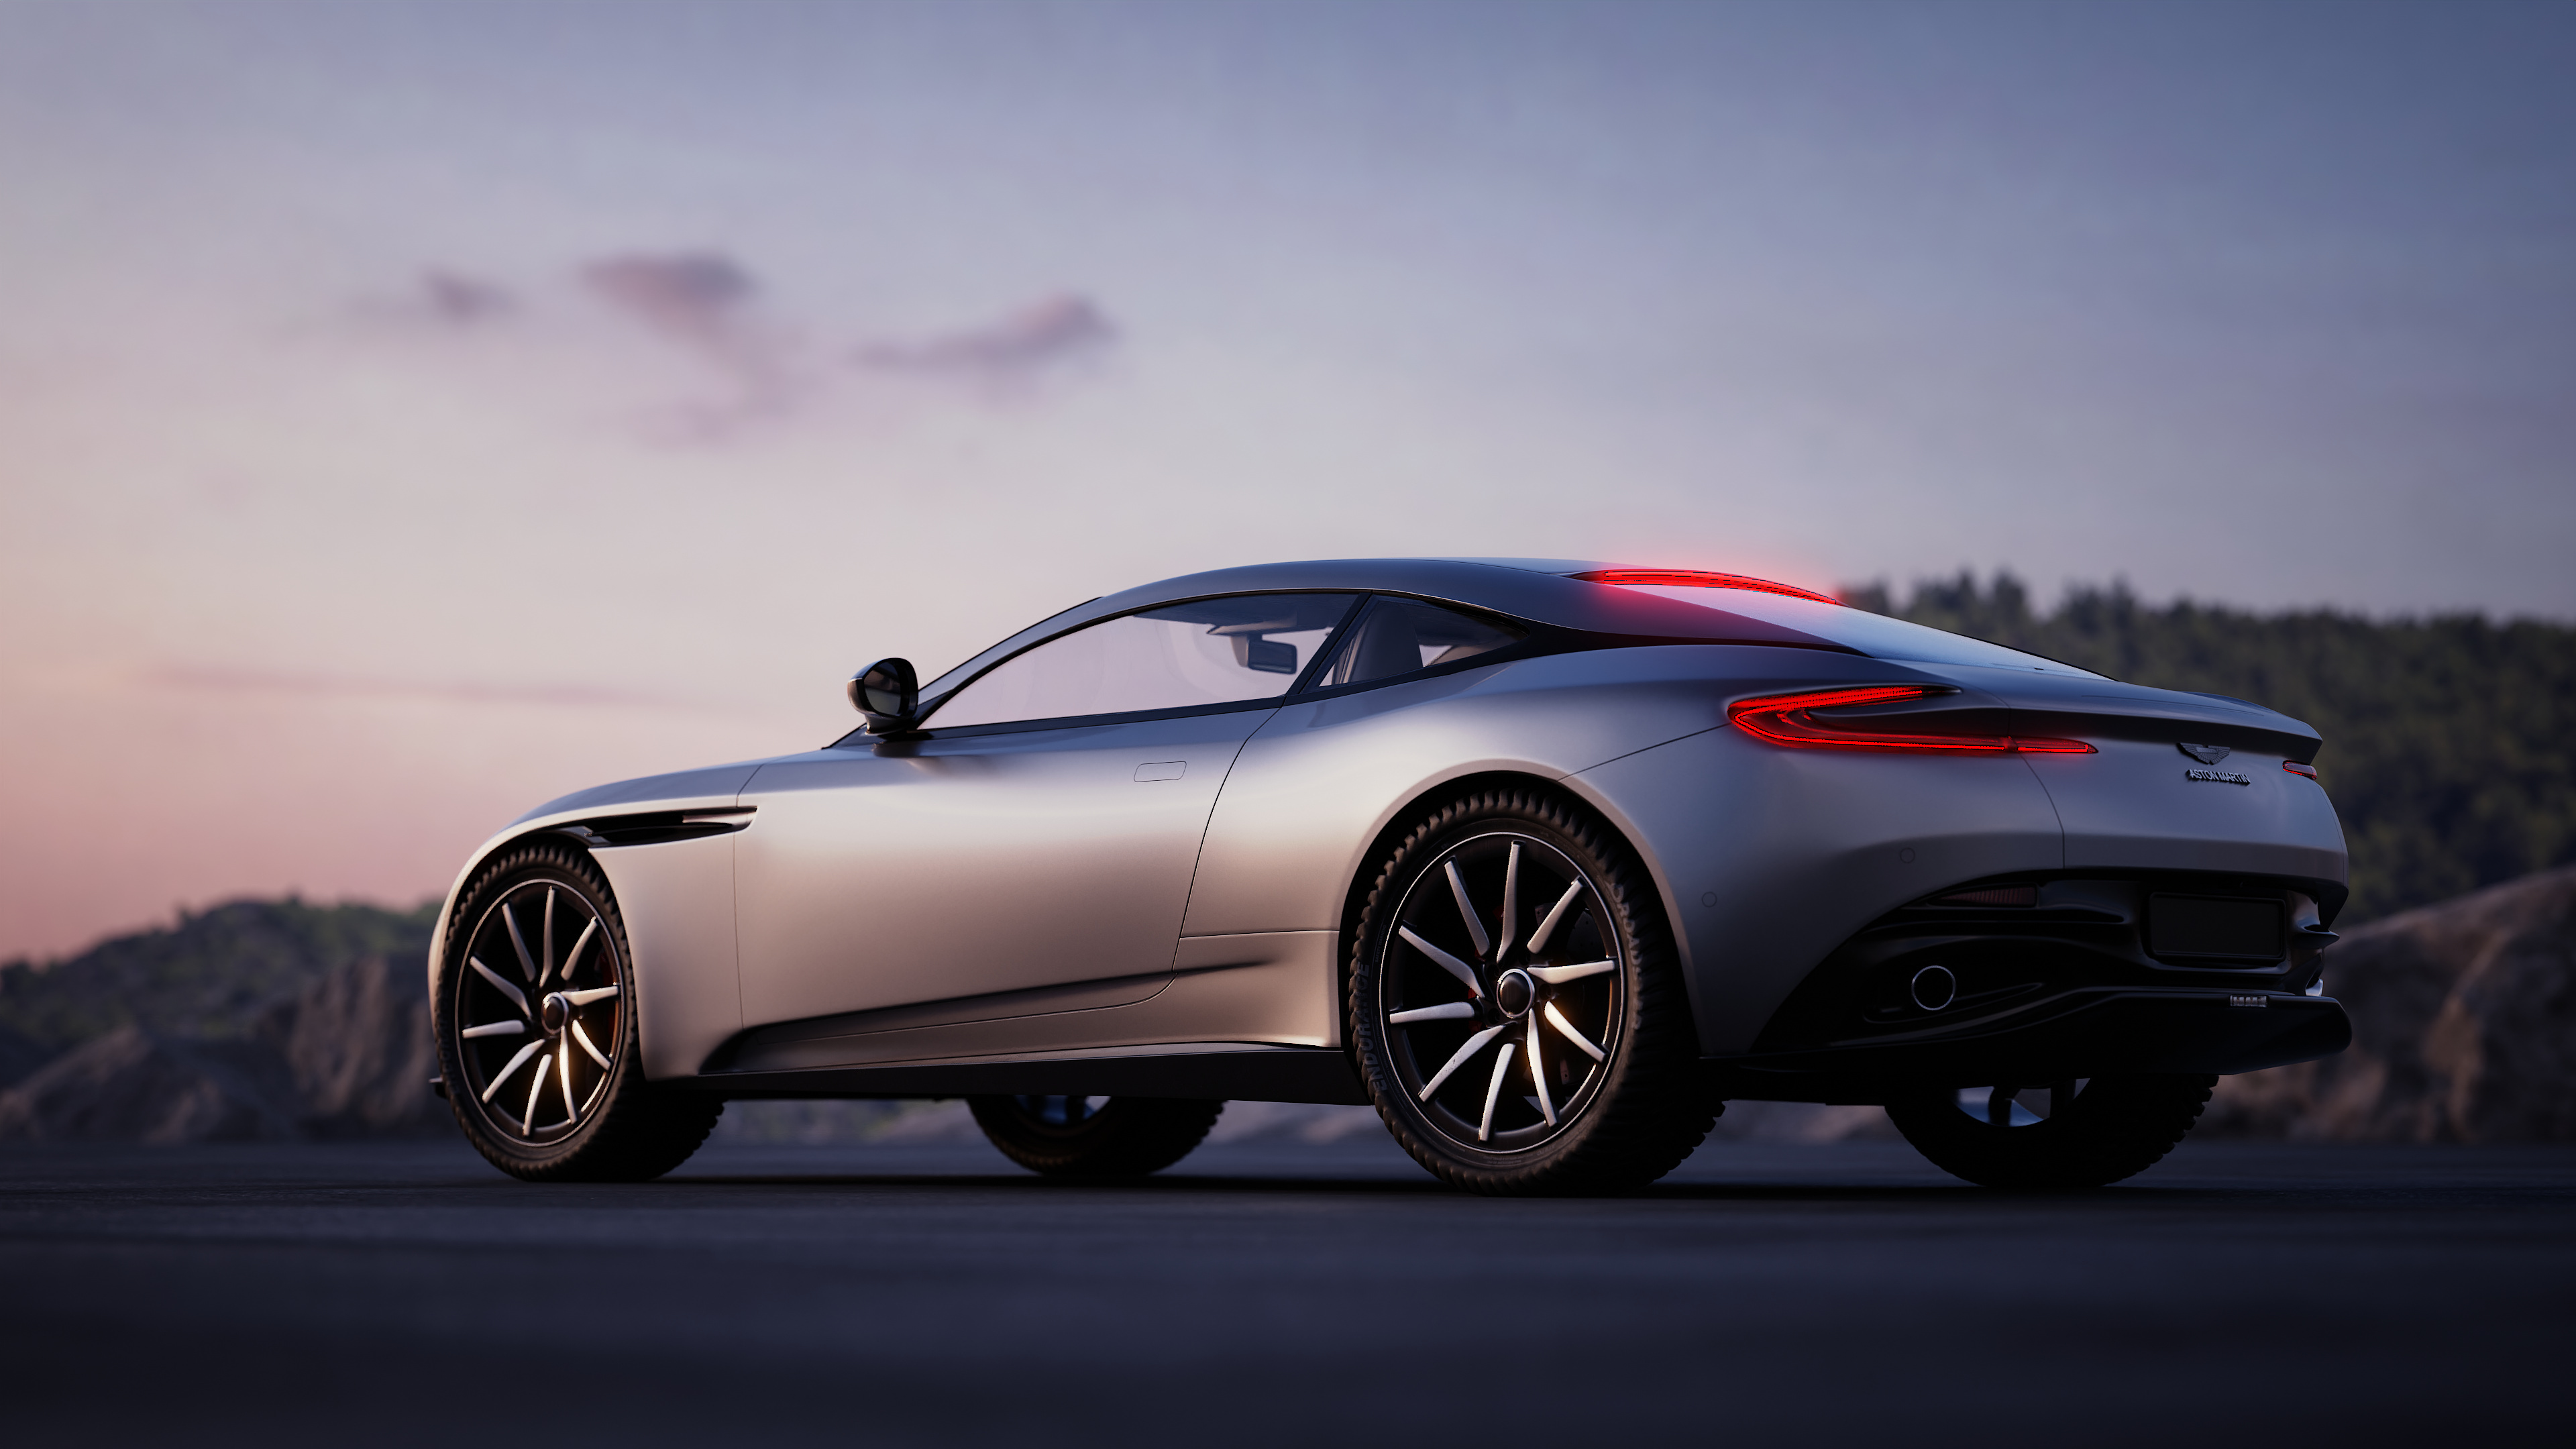 Aston Martin DB11, Finished project showcase, Blender artists community, Stunning results, 3840x2160 4K Desktop